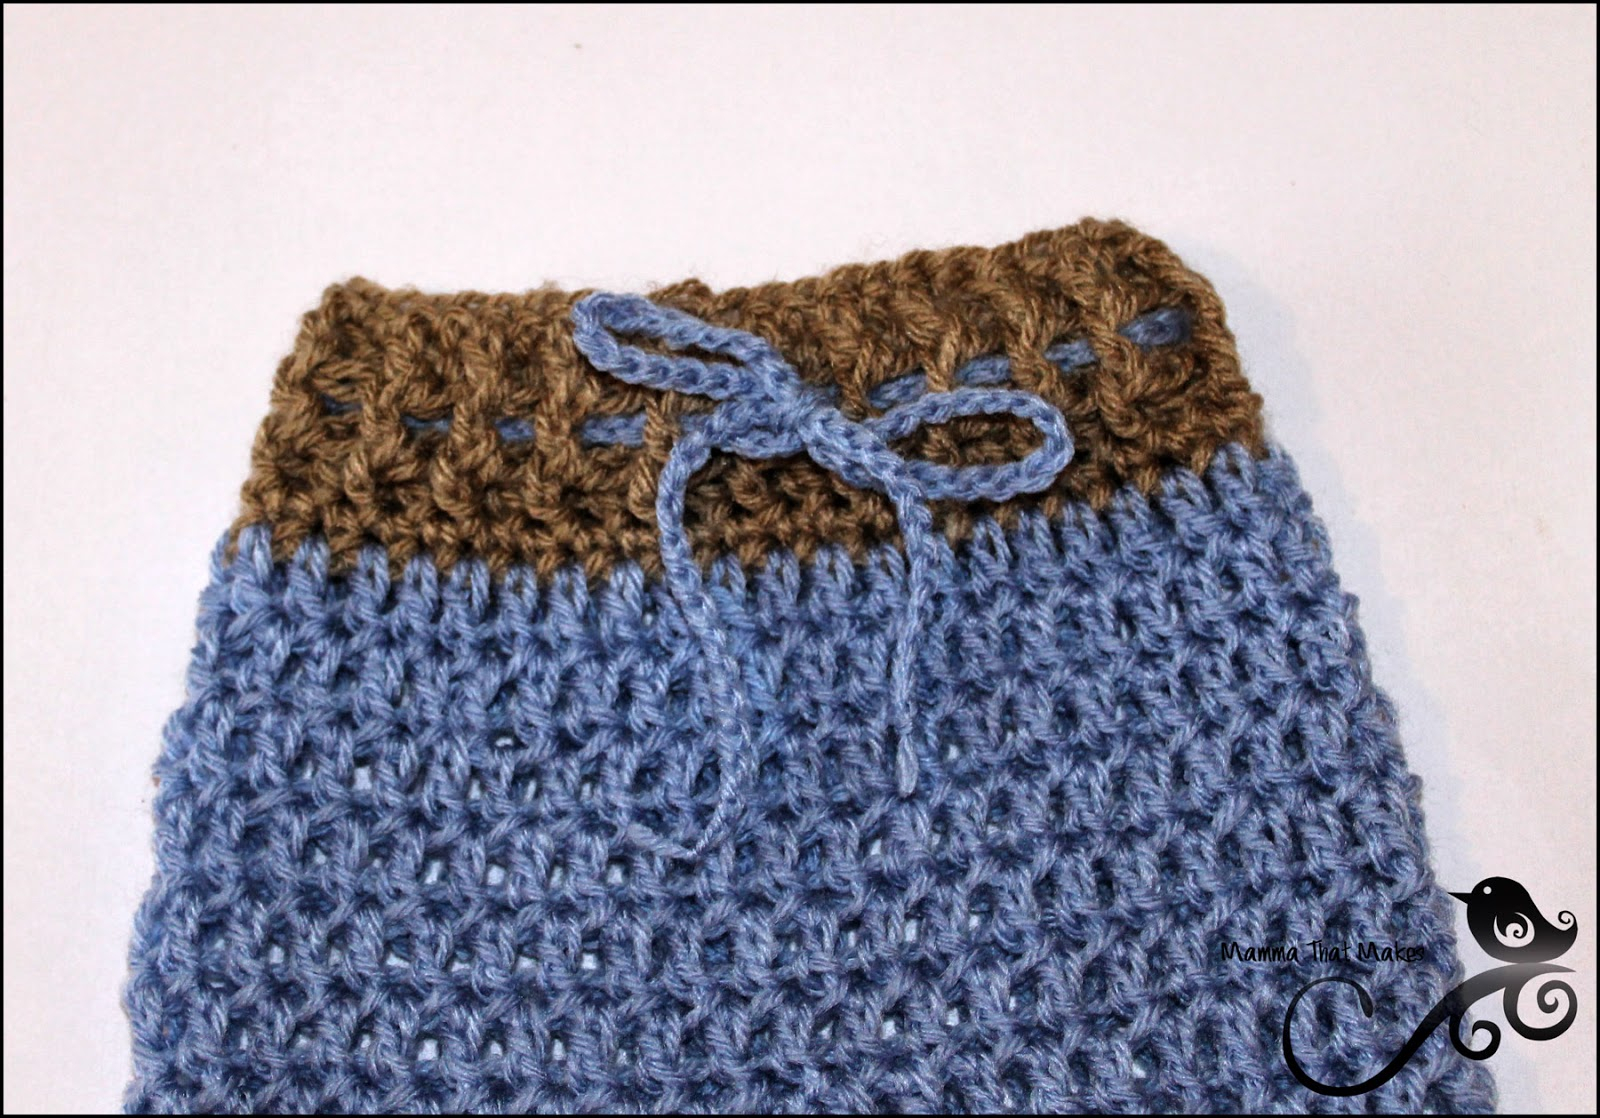 Baby Pants Crochet Pattern Mamma That Makes Lil Pants Free Pattern